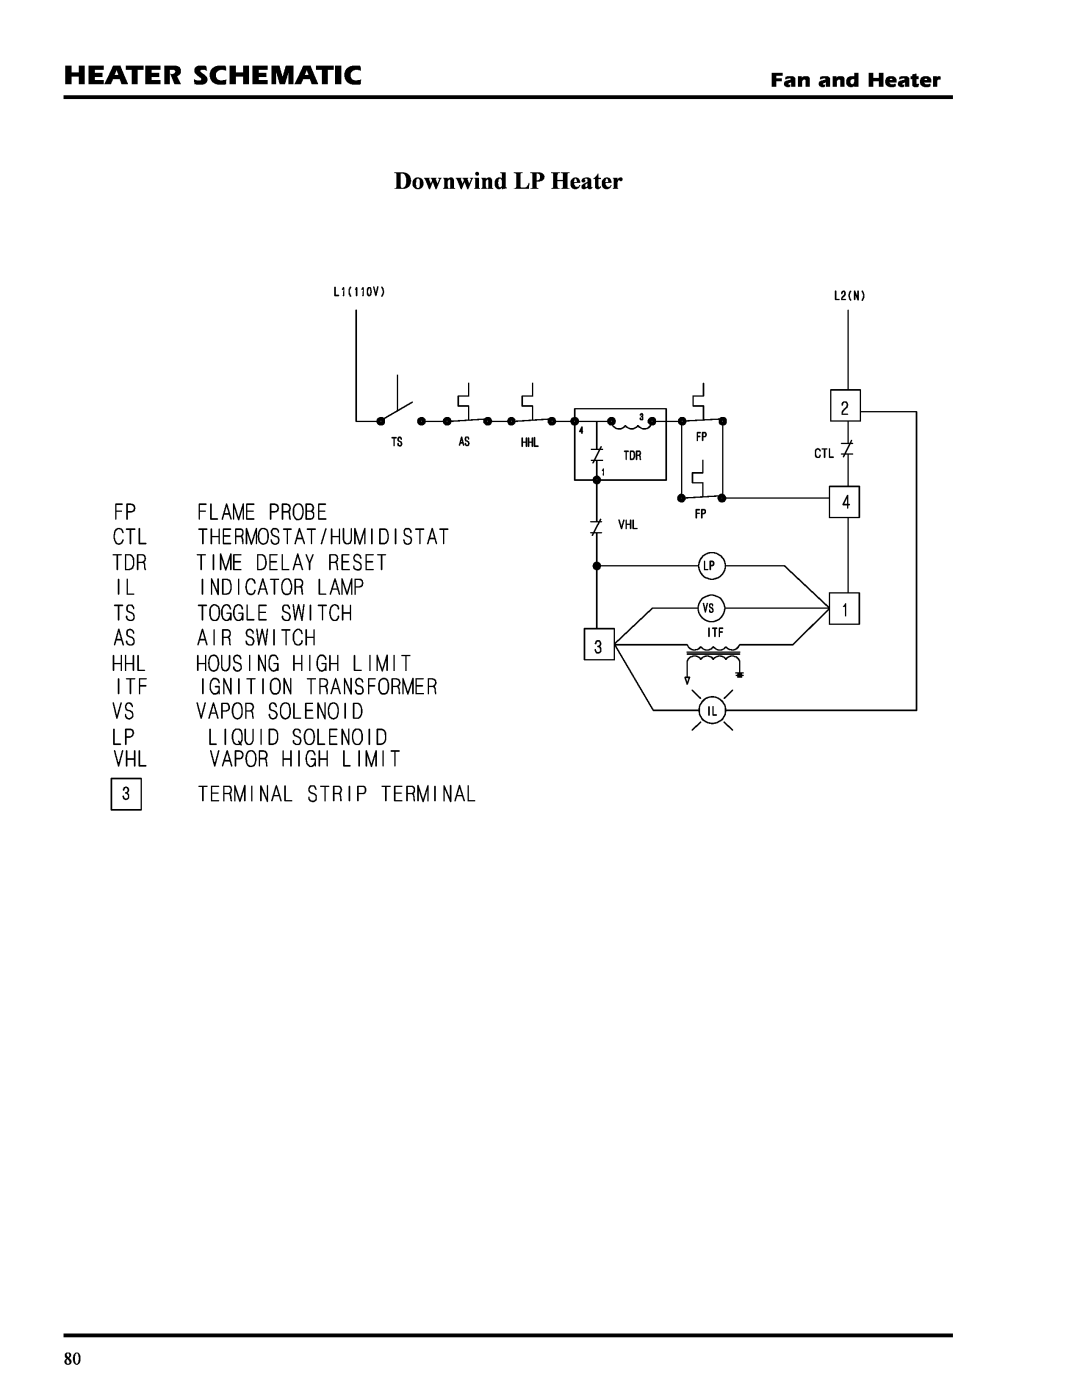 GSI Outdoors PNEG-377 service manual Downwind LP Heater, Heater Schematic, Fan and Heater 